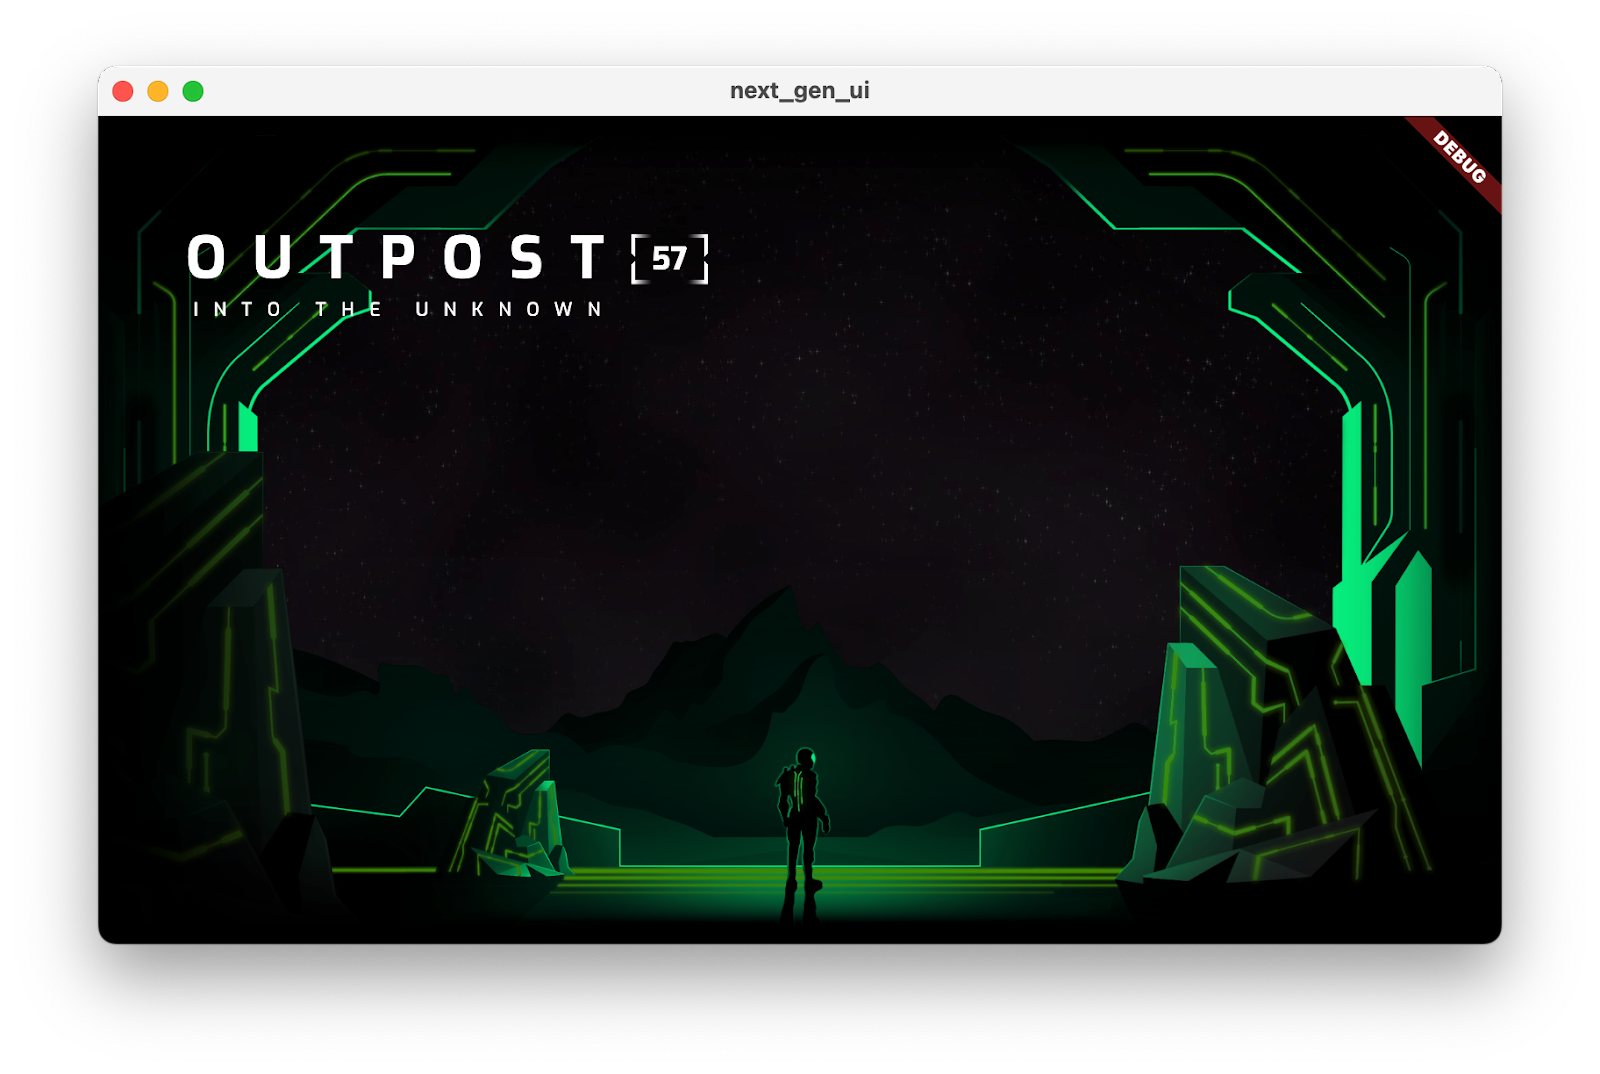 'Outpost [57] Into the unknown'이라고 표시된 제목과 함께 실행되는 Codelab 앱